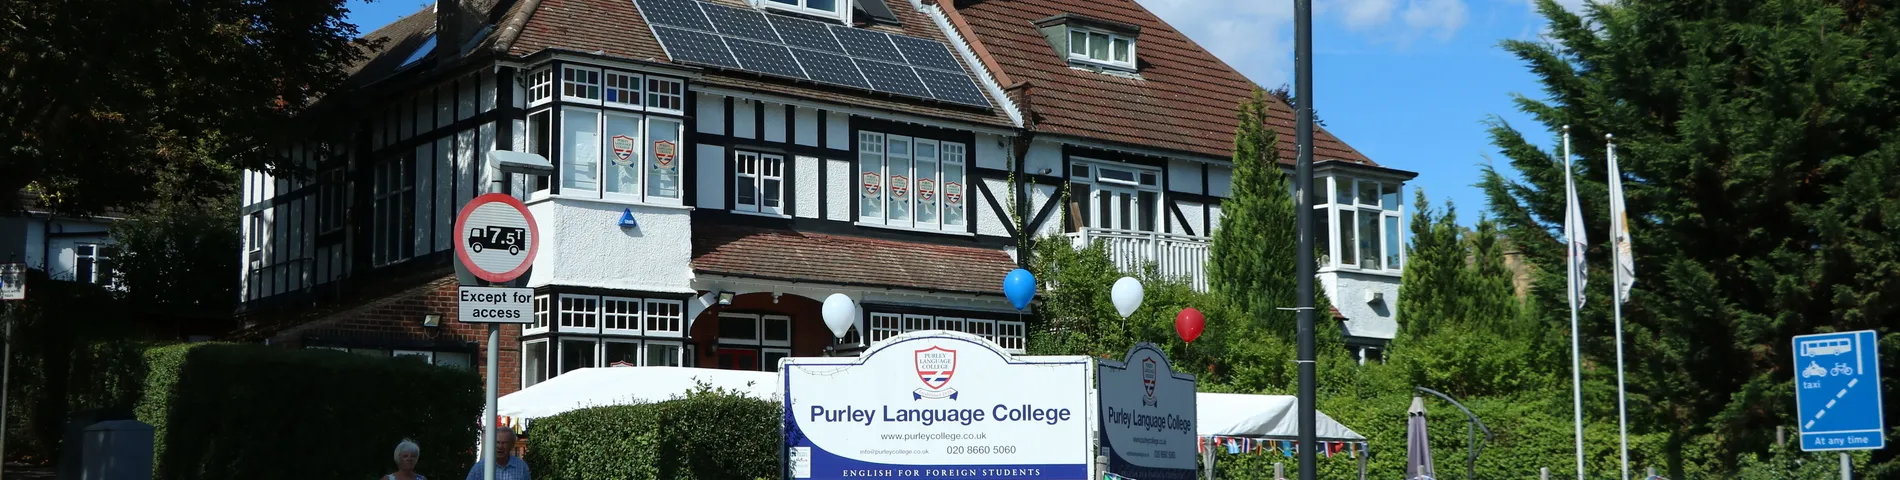 Purley Language College immagine 1